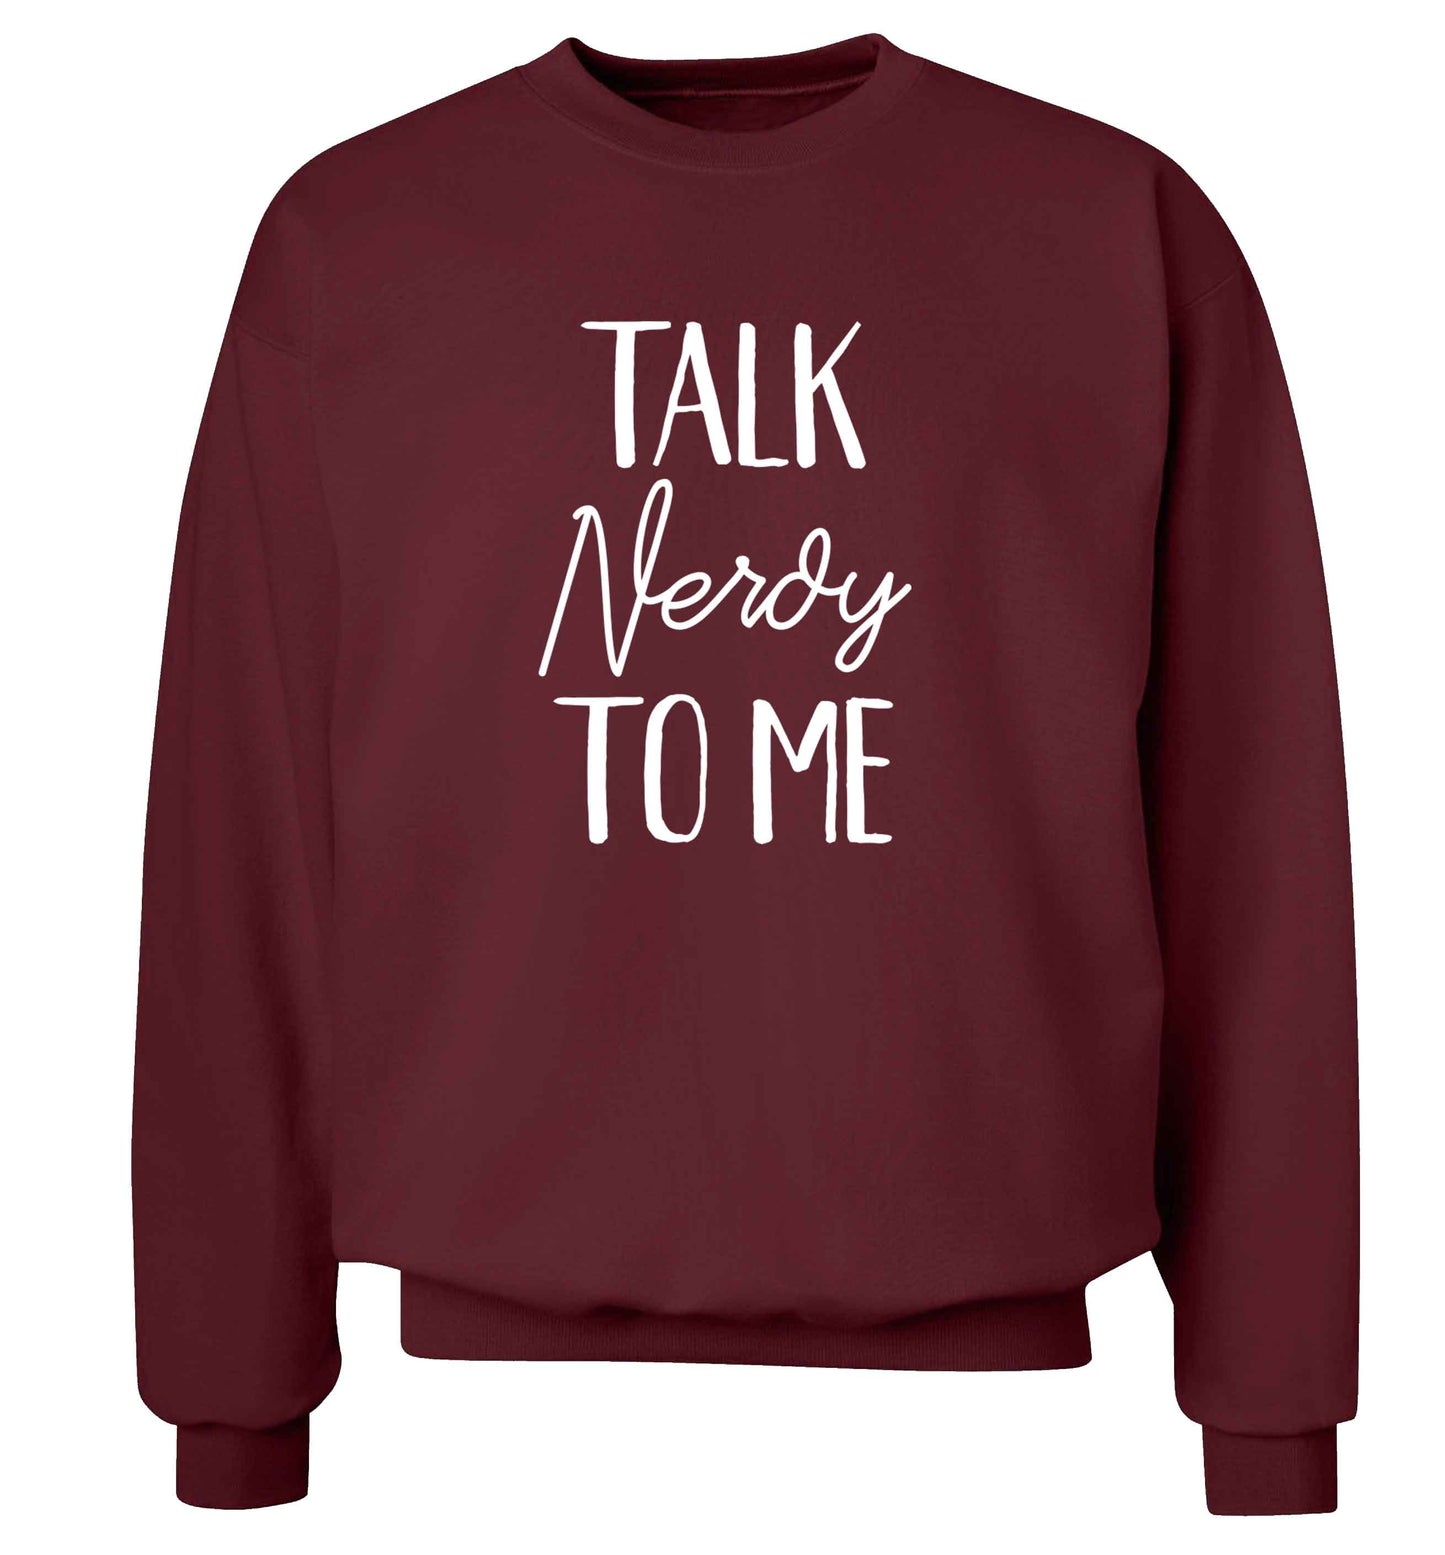 Talk nerdy to me adult's unisex maroon sweater 2XL